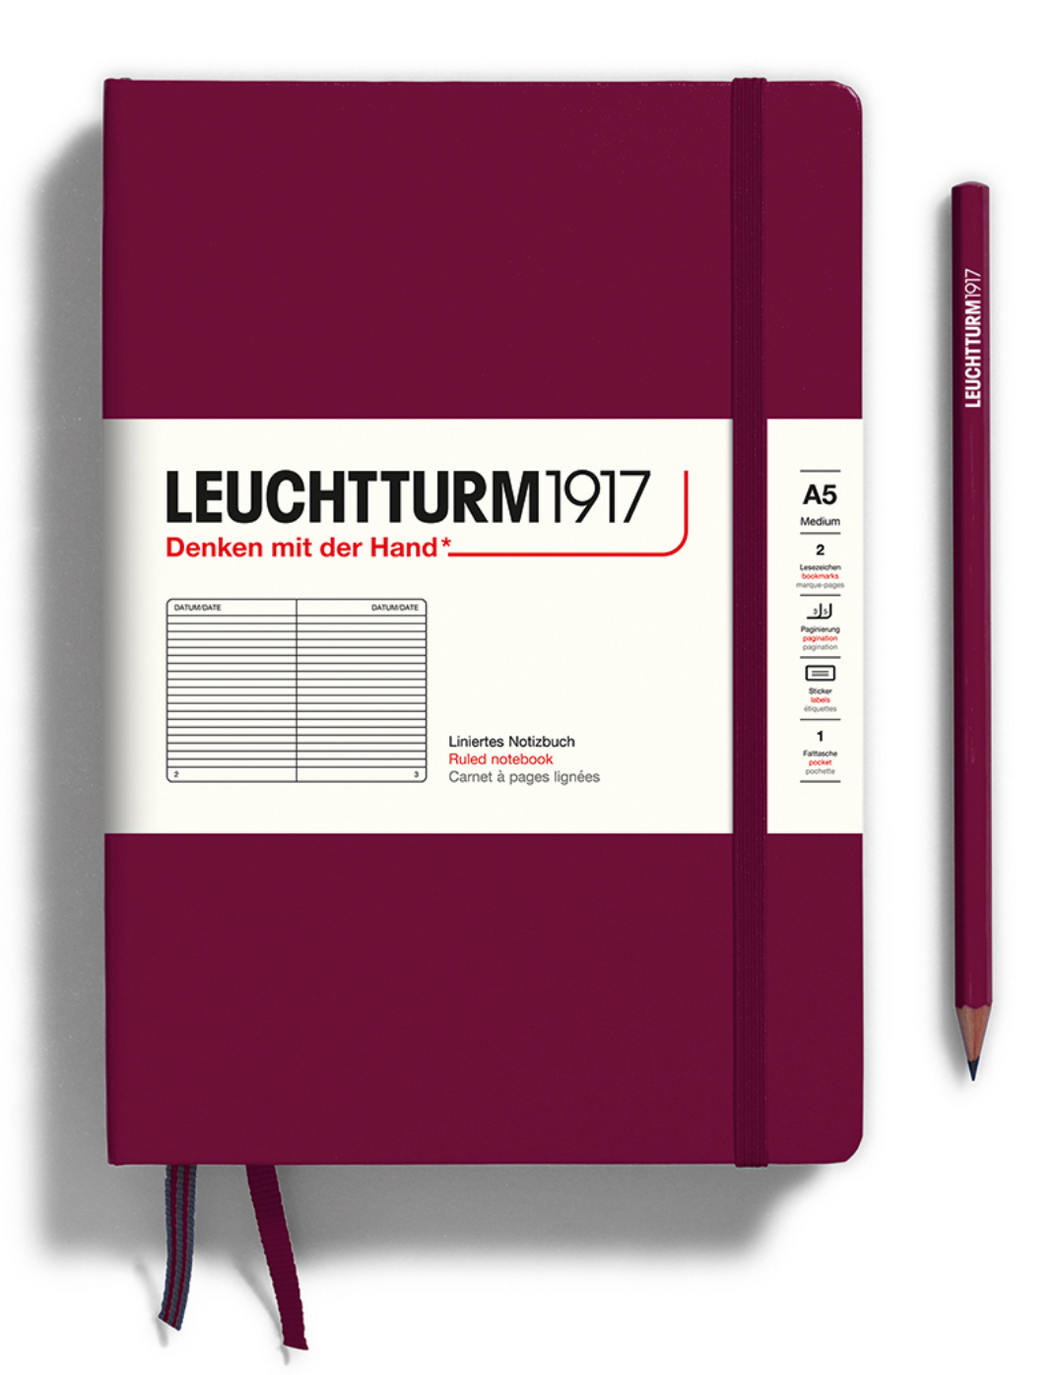 Hardcover Notebook - Medium, Port Red